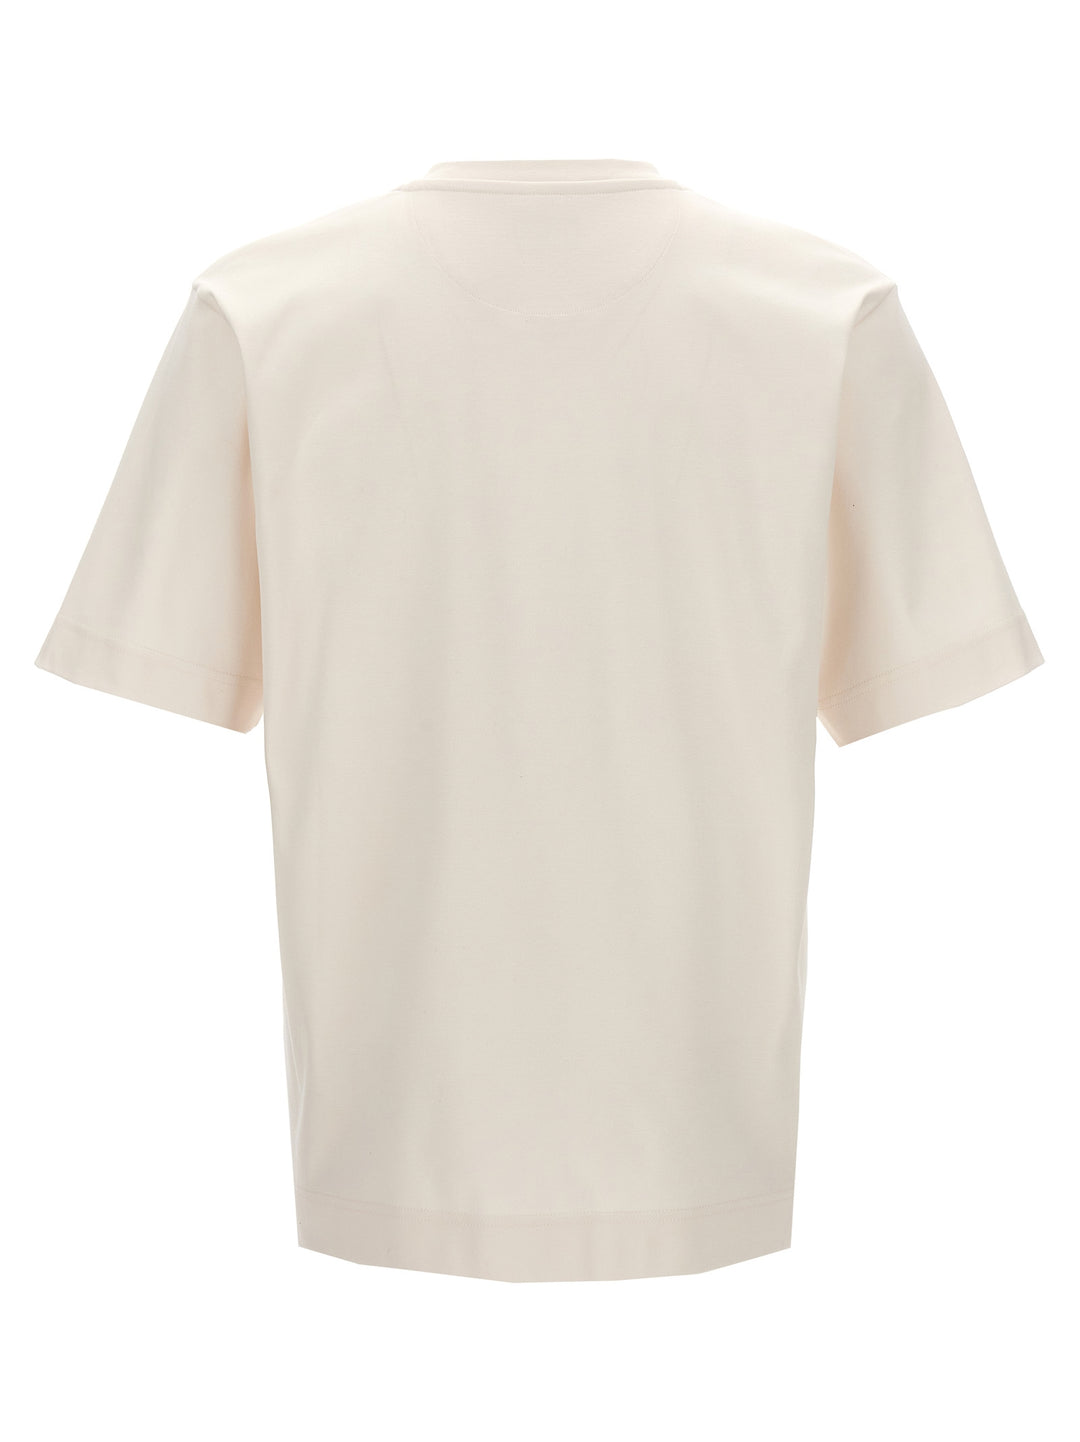 Attrezzi T Shirt Bianco